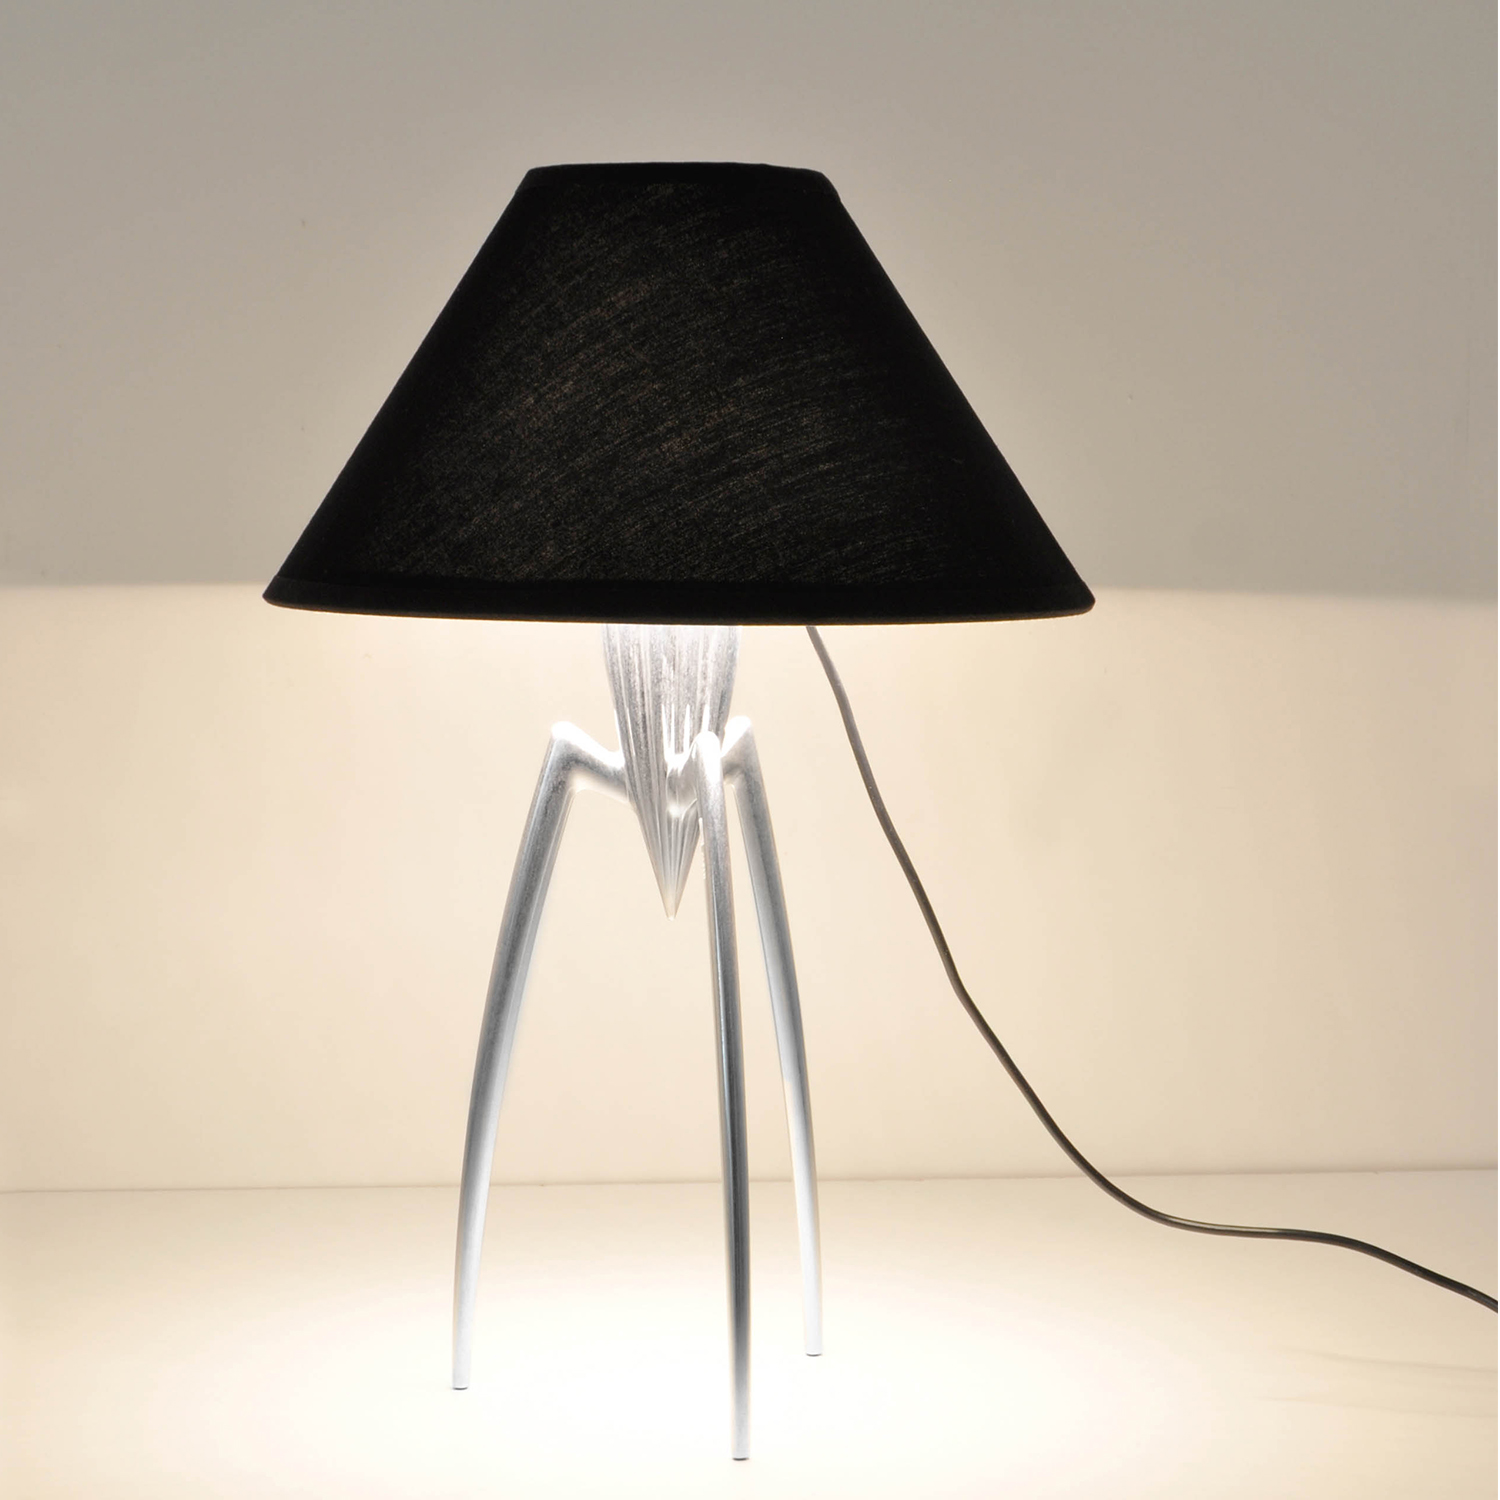 Cappello Table Lamp的图片
